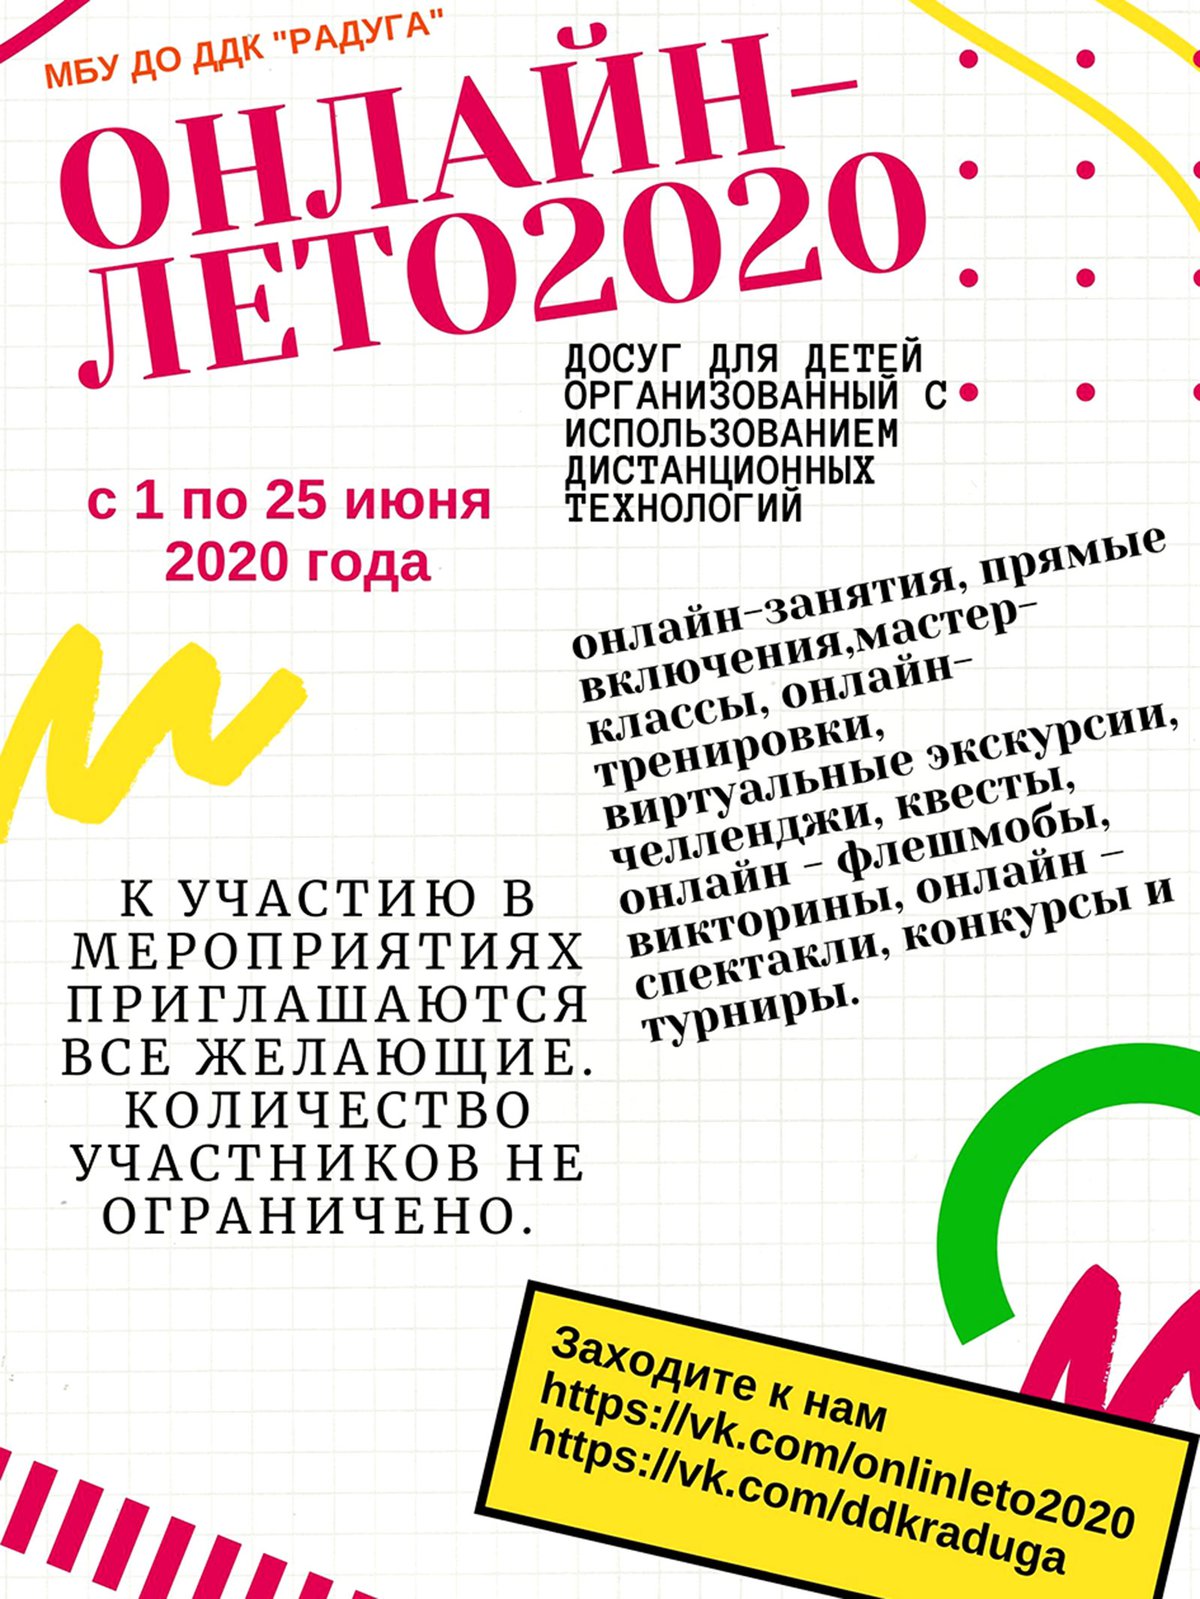 «Онлайн-лето 2020» наступает в «Радуге»